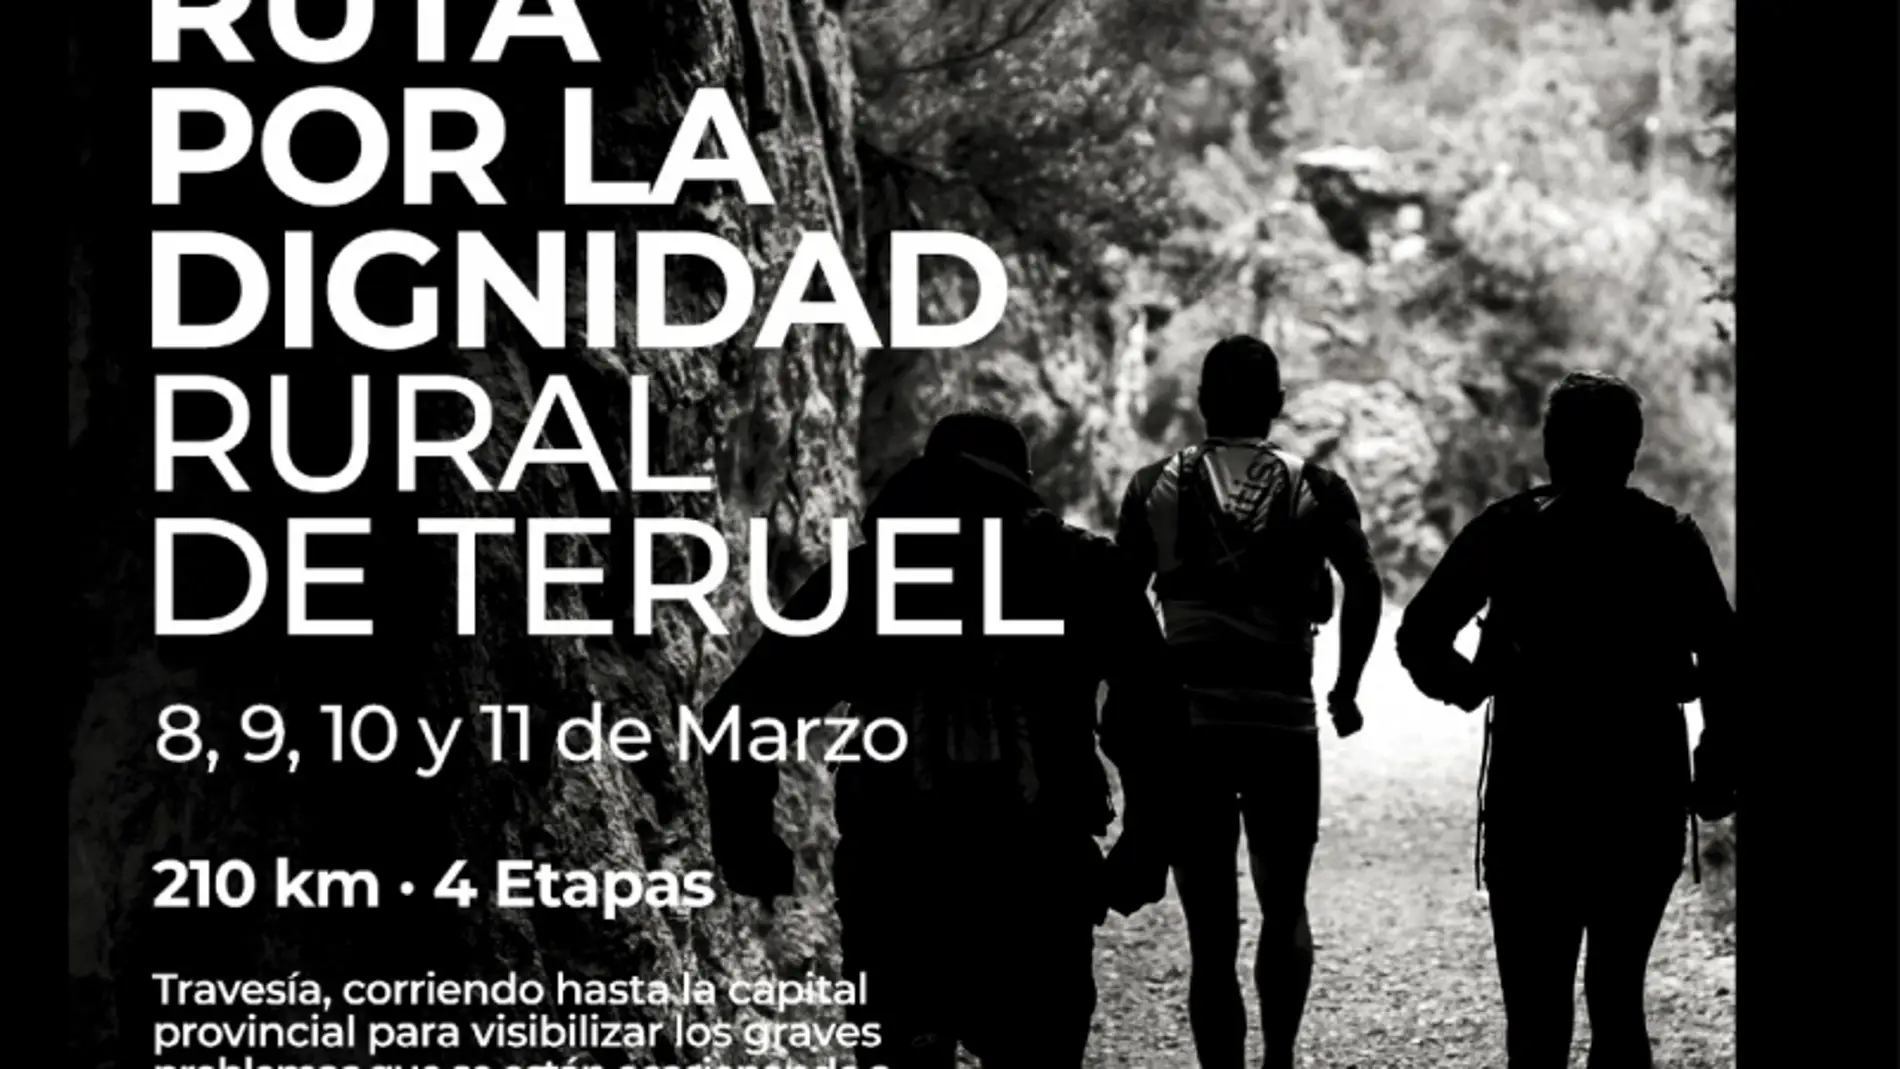 Ruta por la dignidad rural de Teruel 